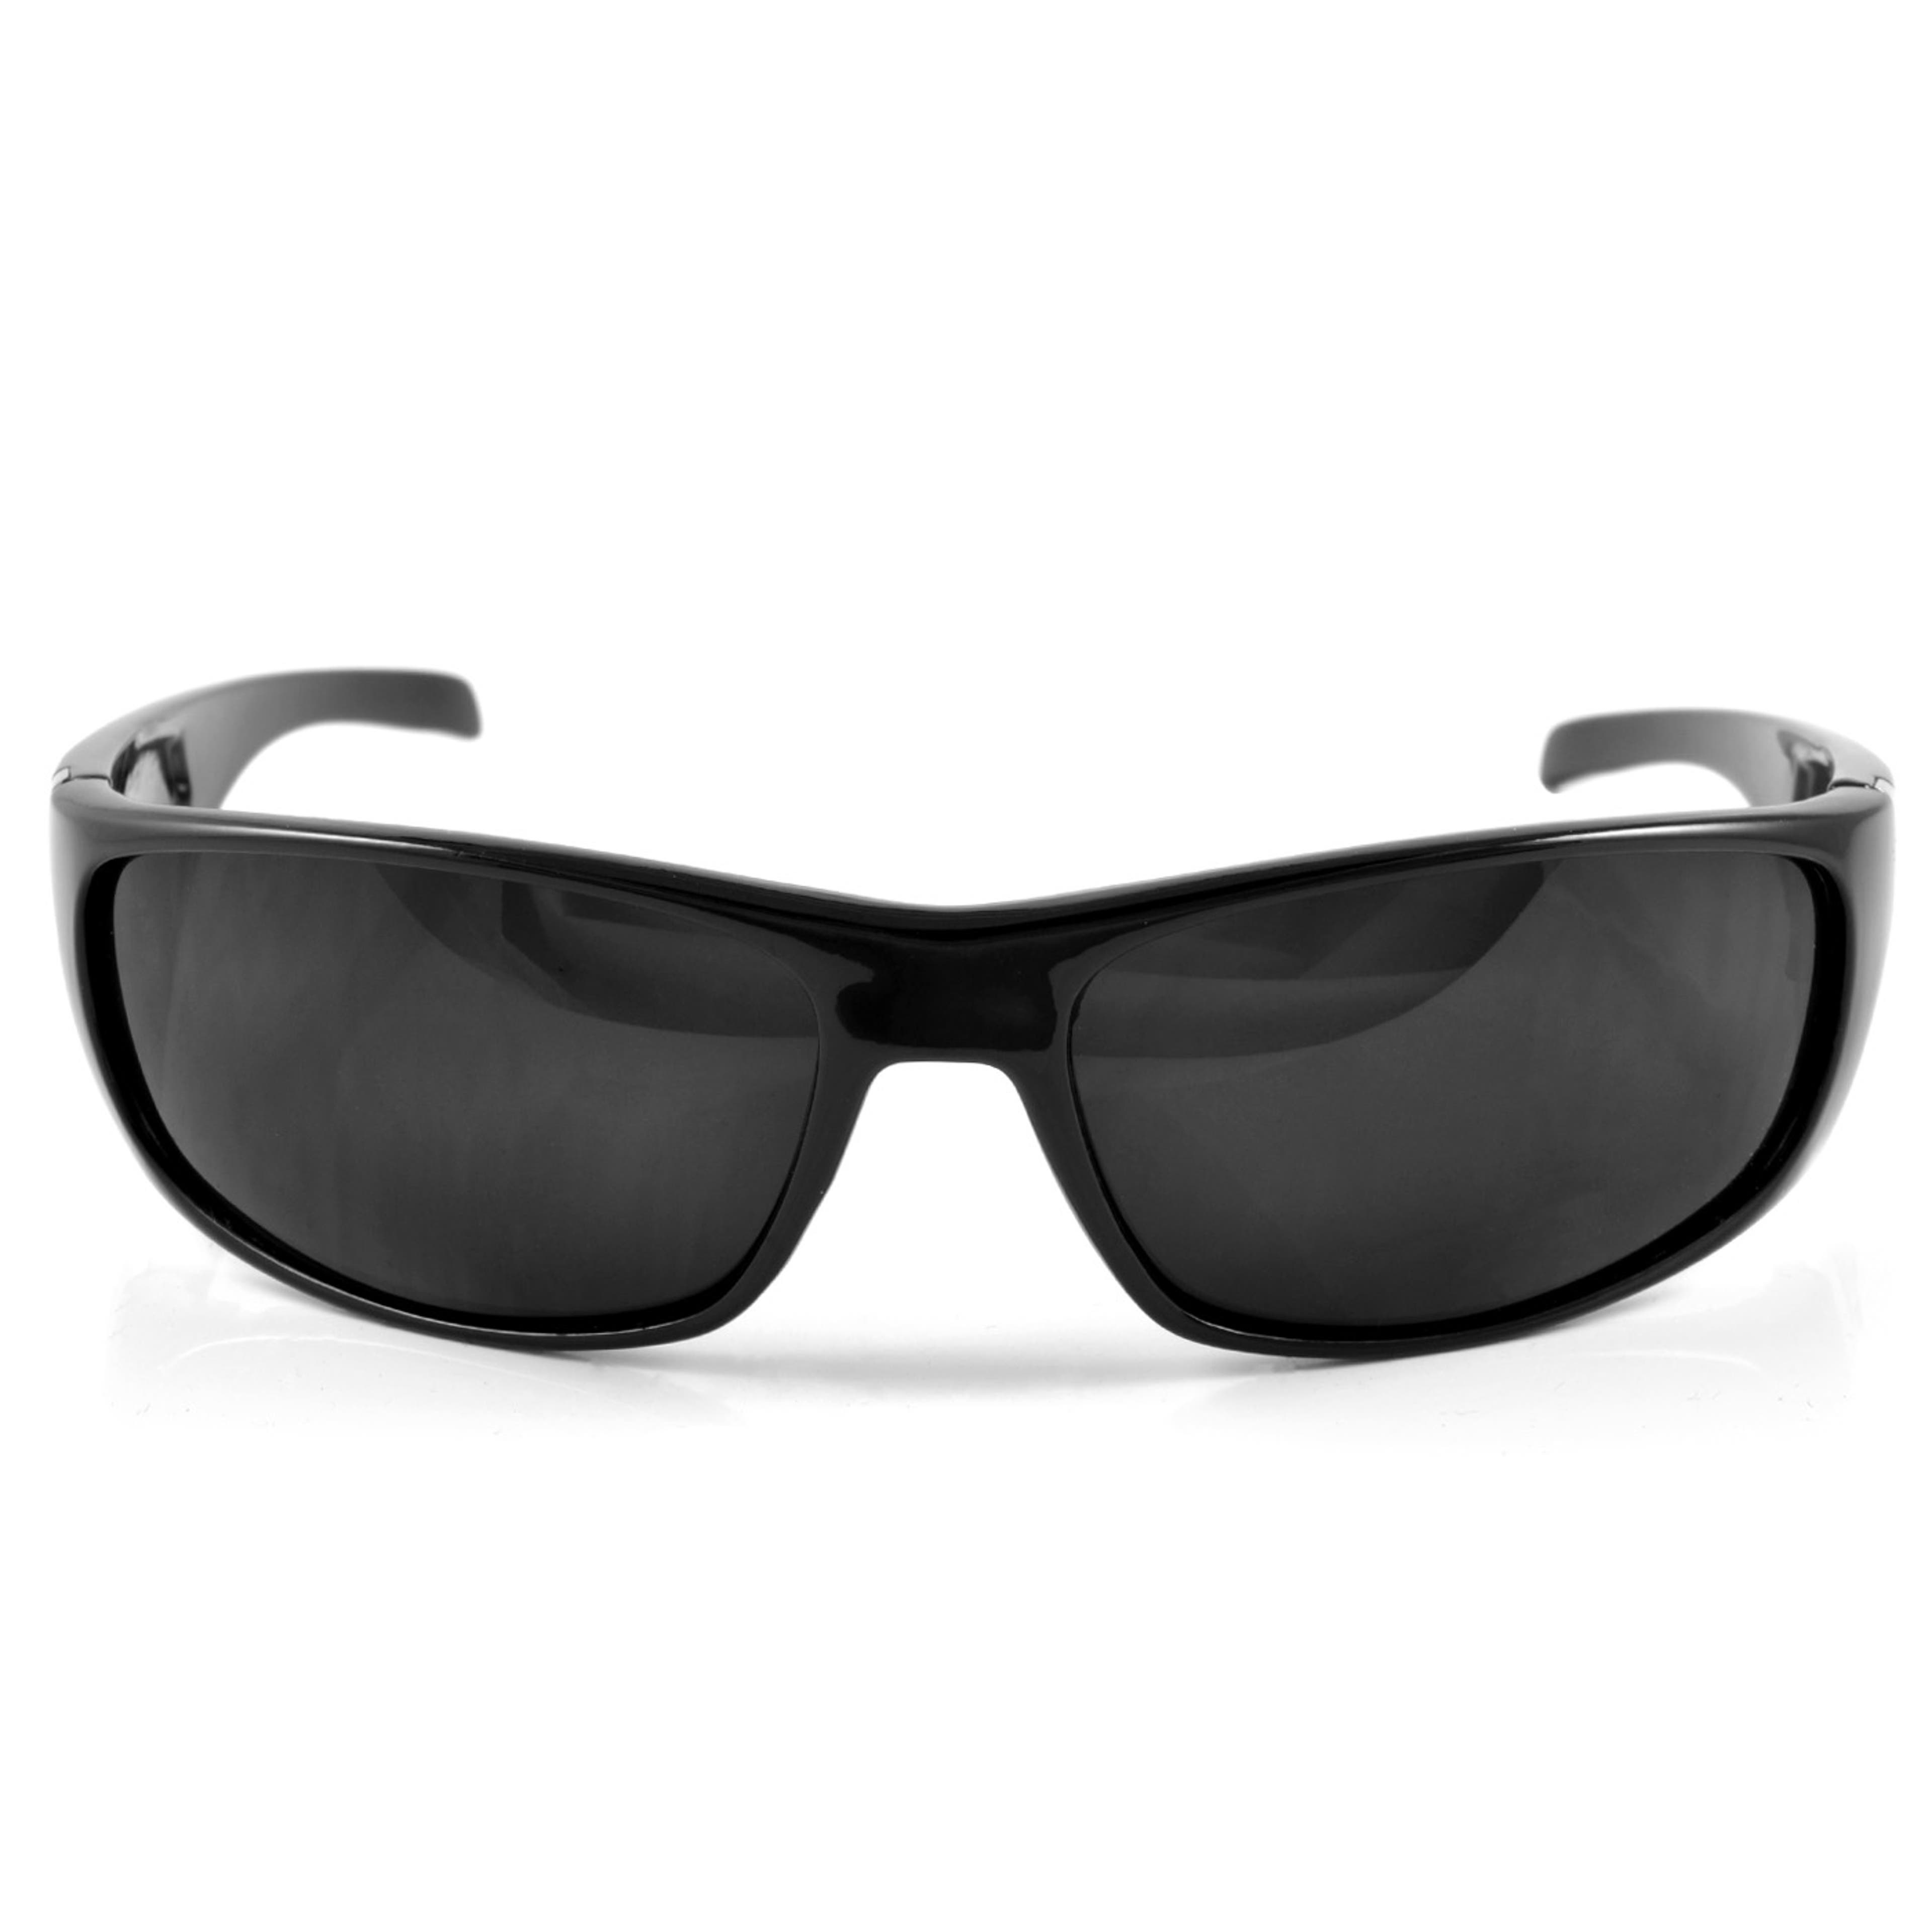 Black & Black Wrap Around Biker Sunglasses, In stock!